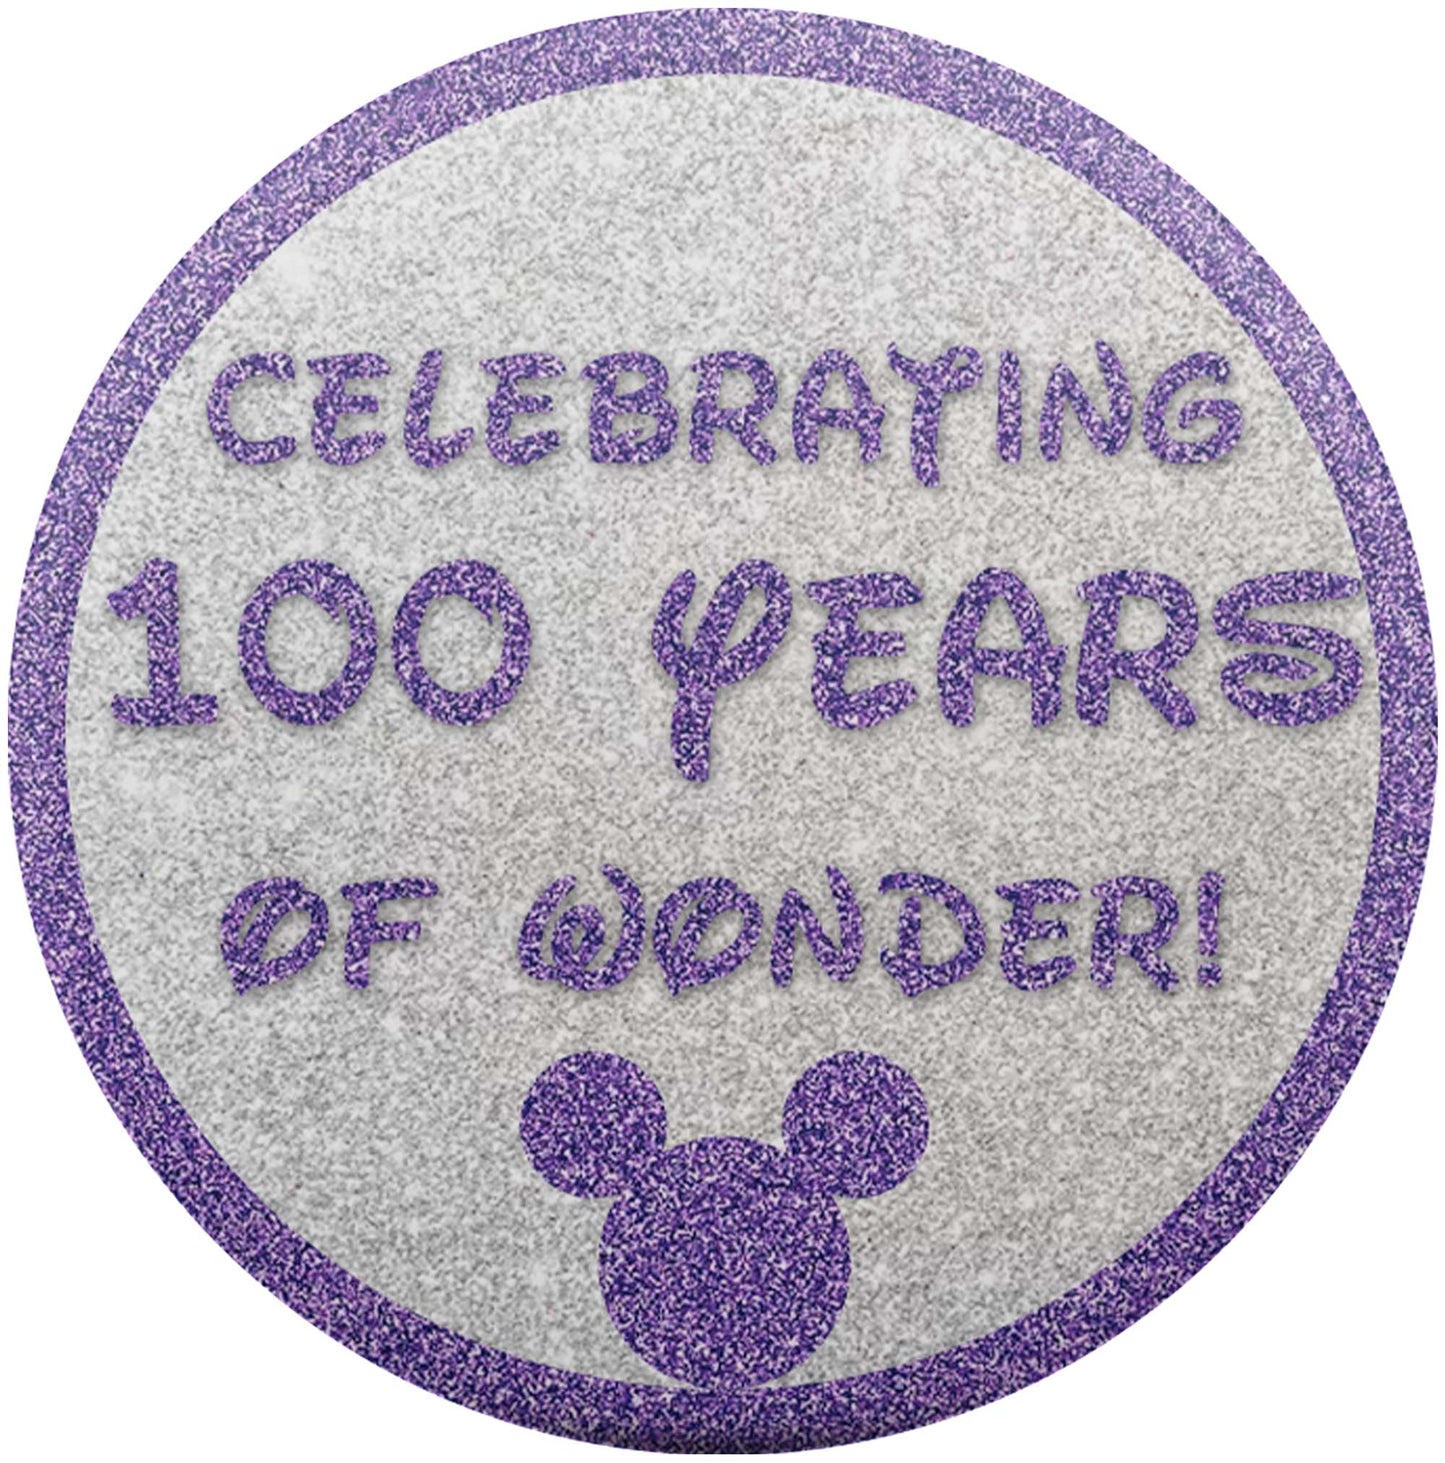 Celebrating 100 Years Of Wonder